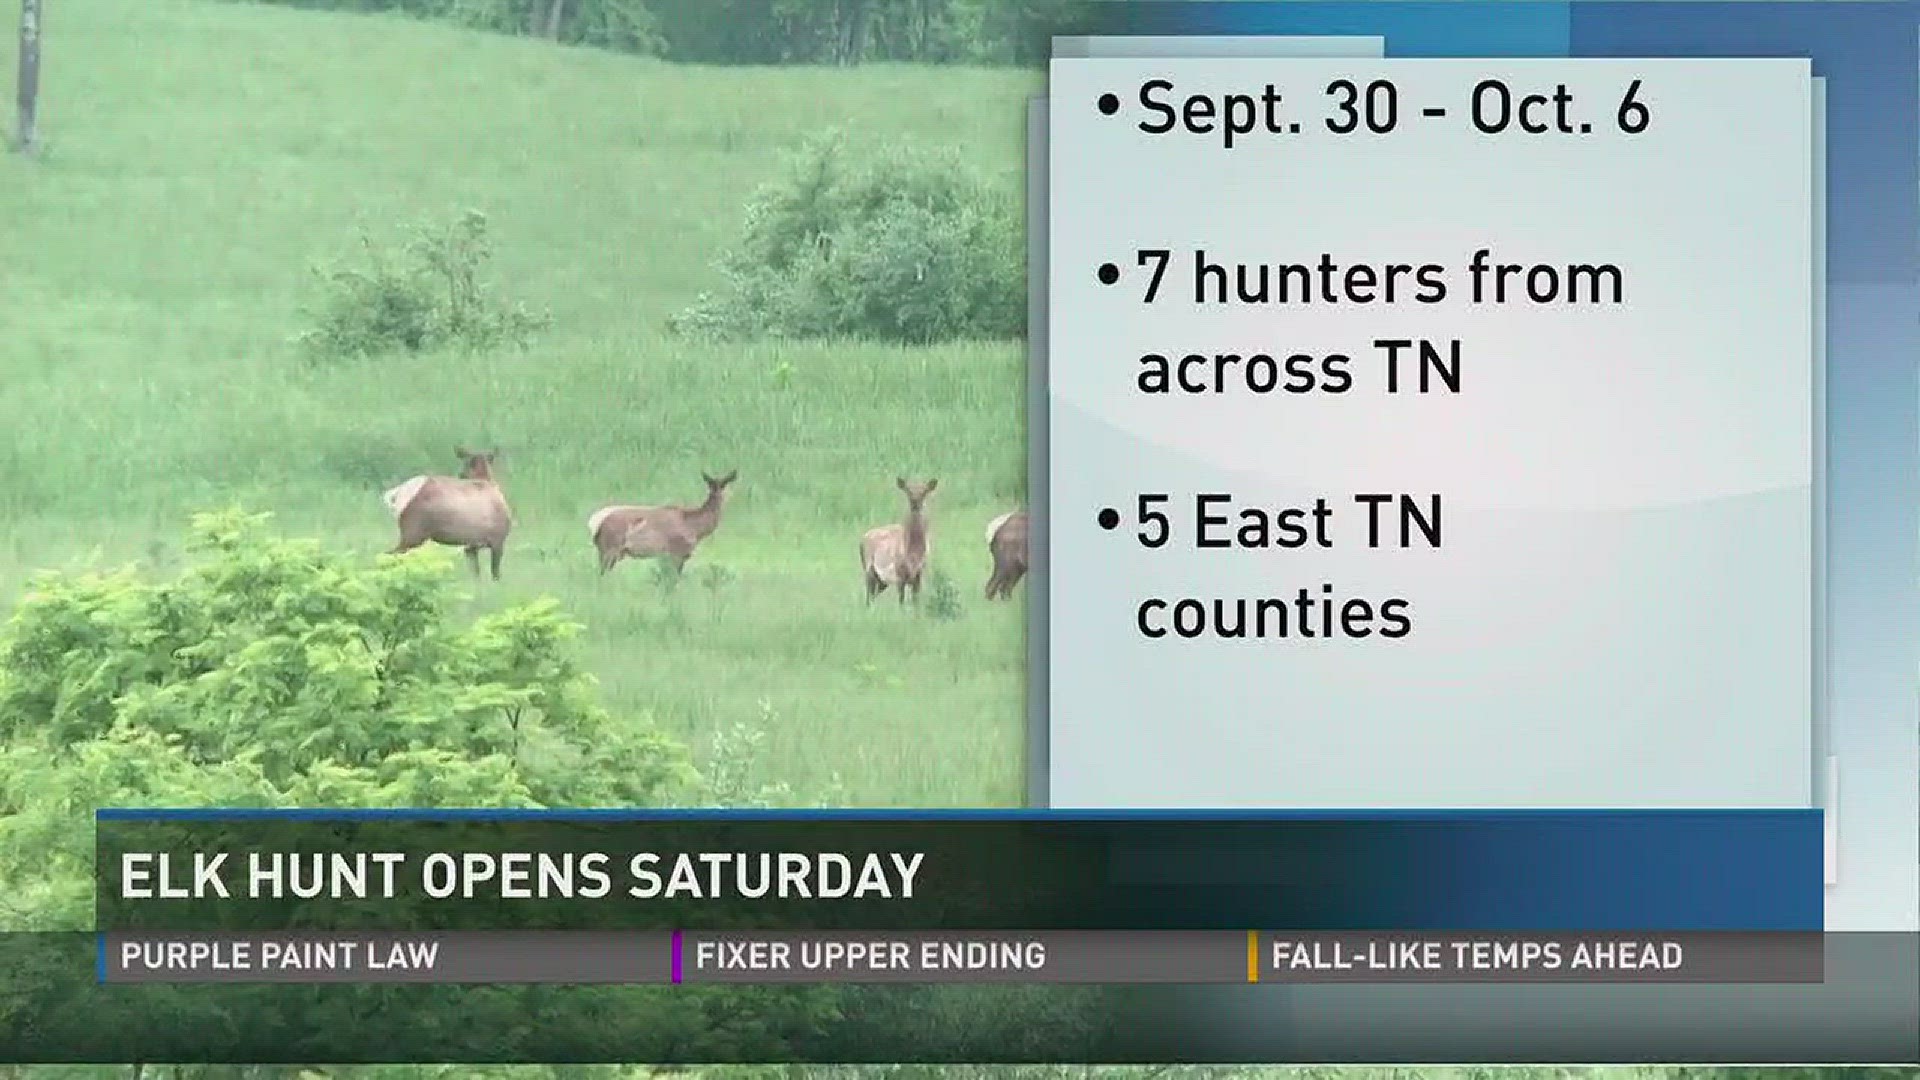 TWRA officials have been managing elk hunts since 2009.